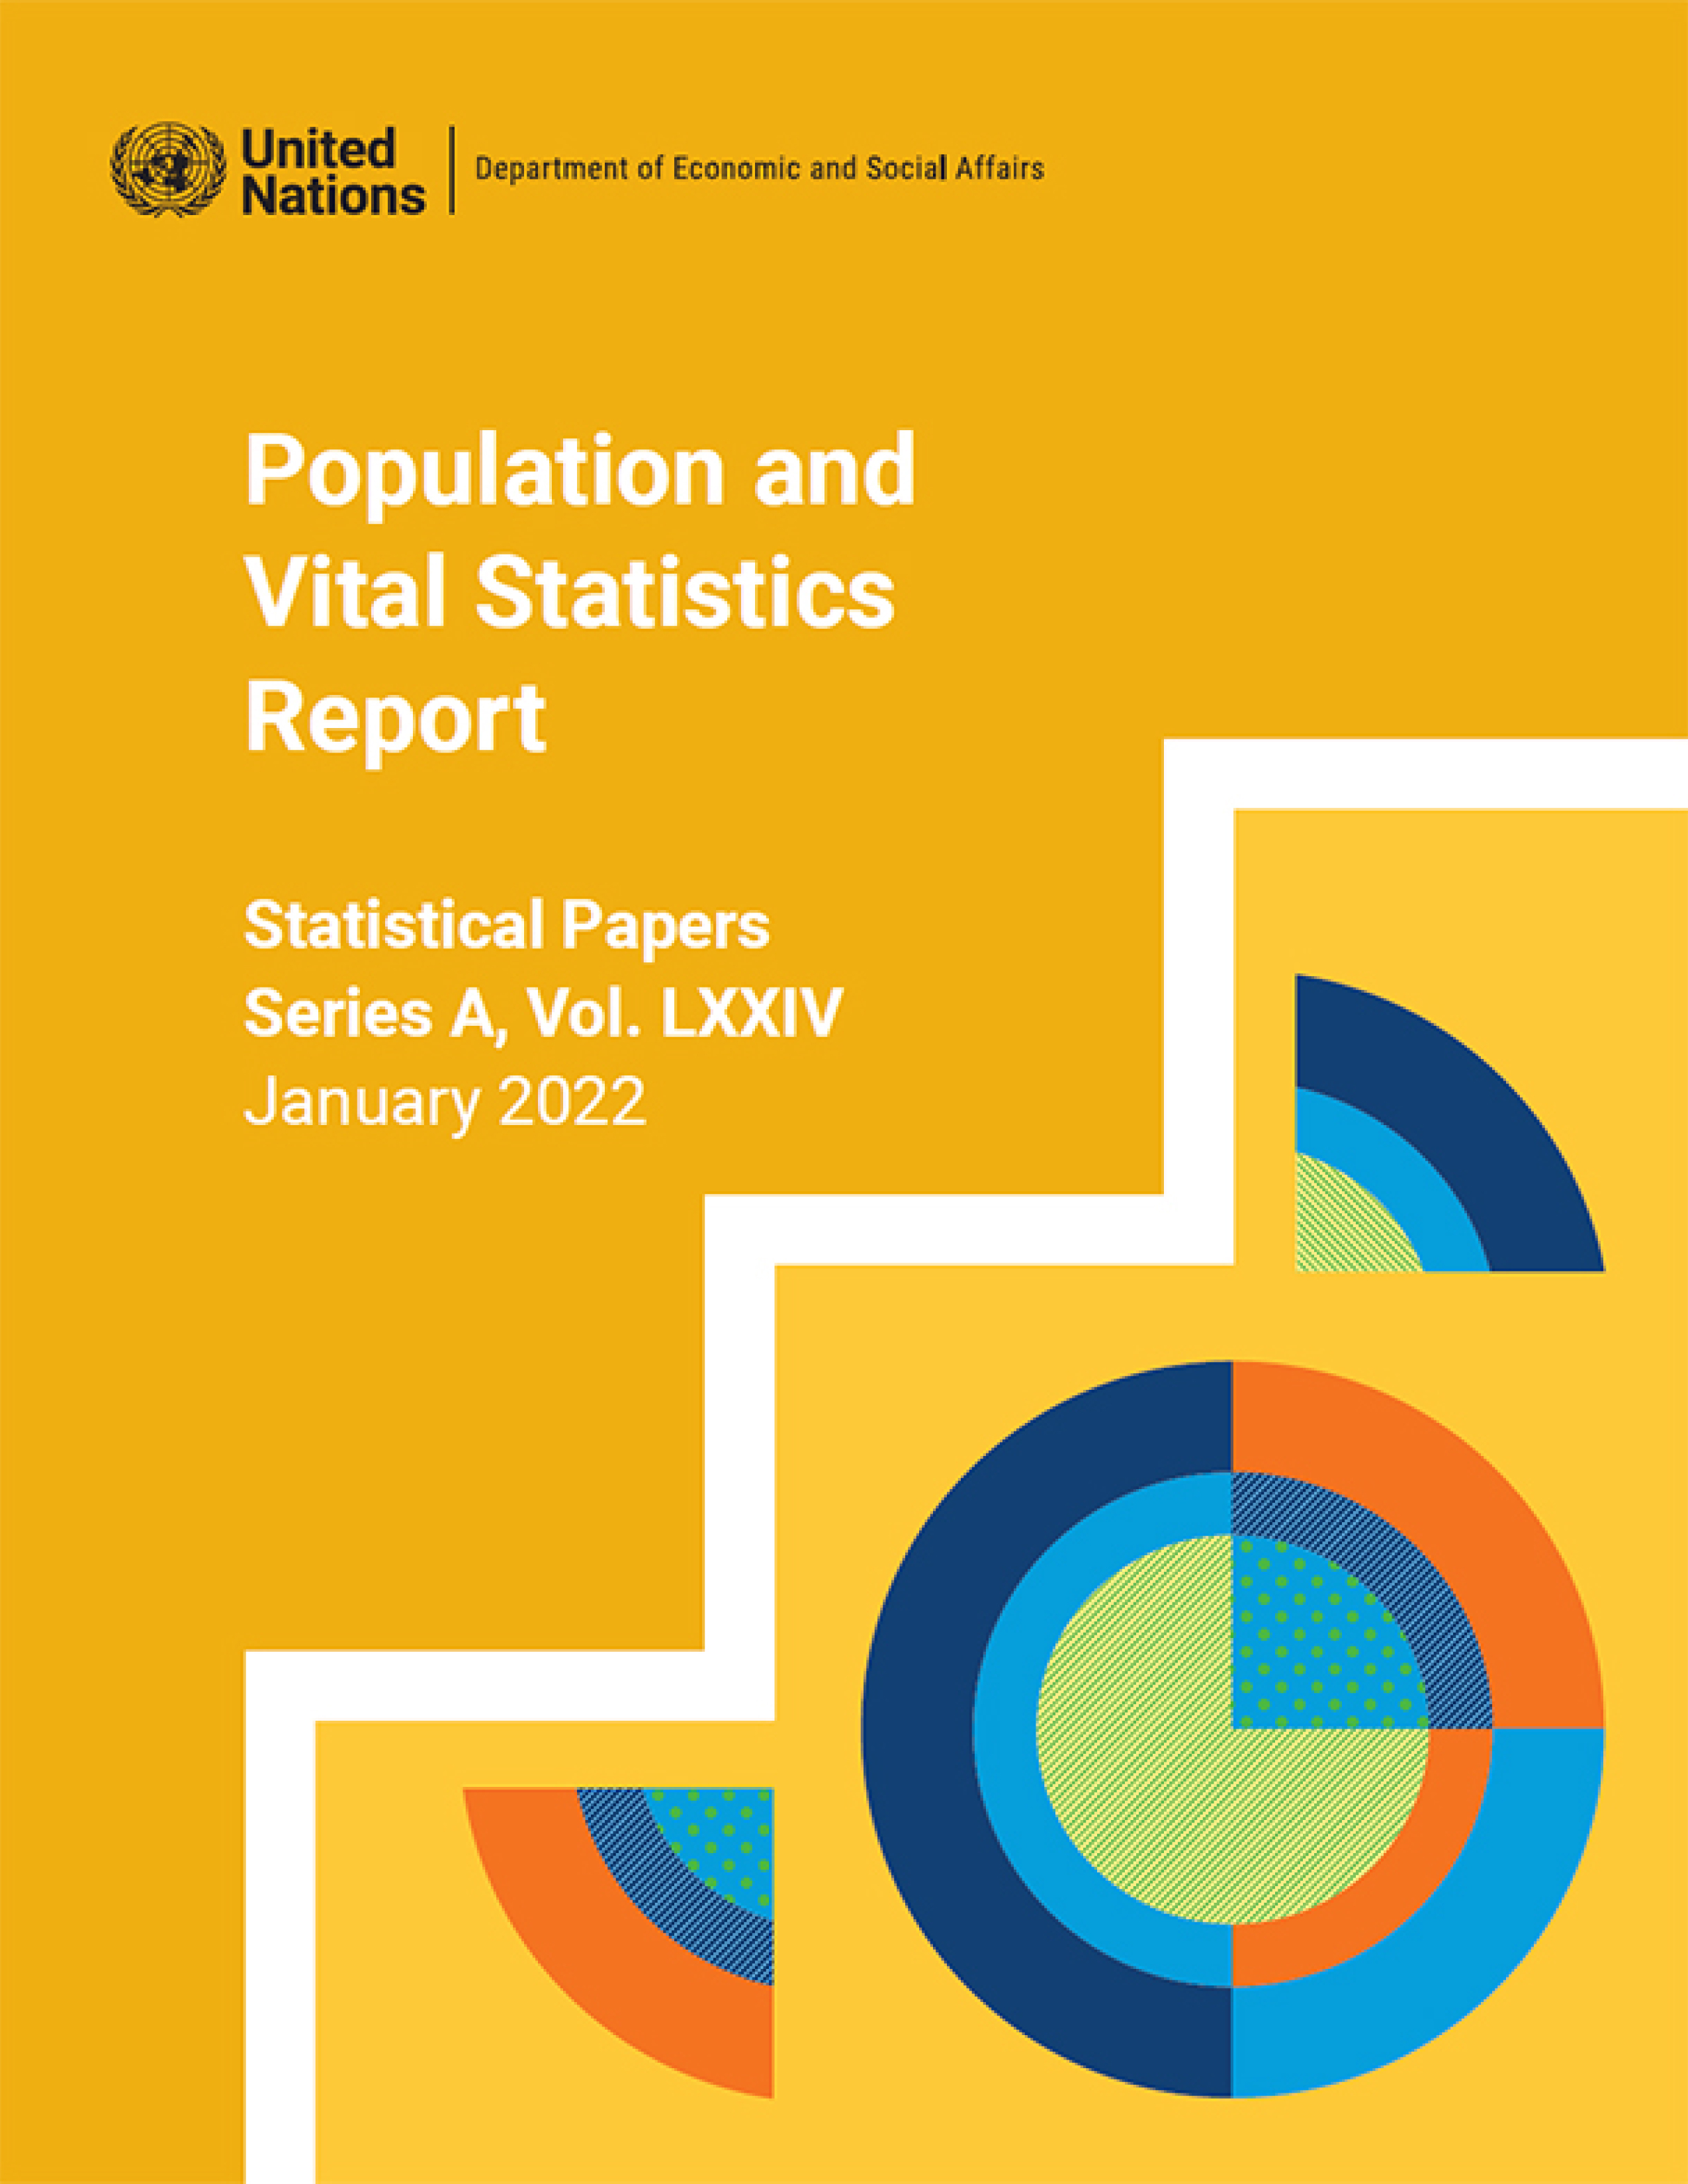 Population and Vital Statistics Report 2022